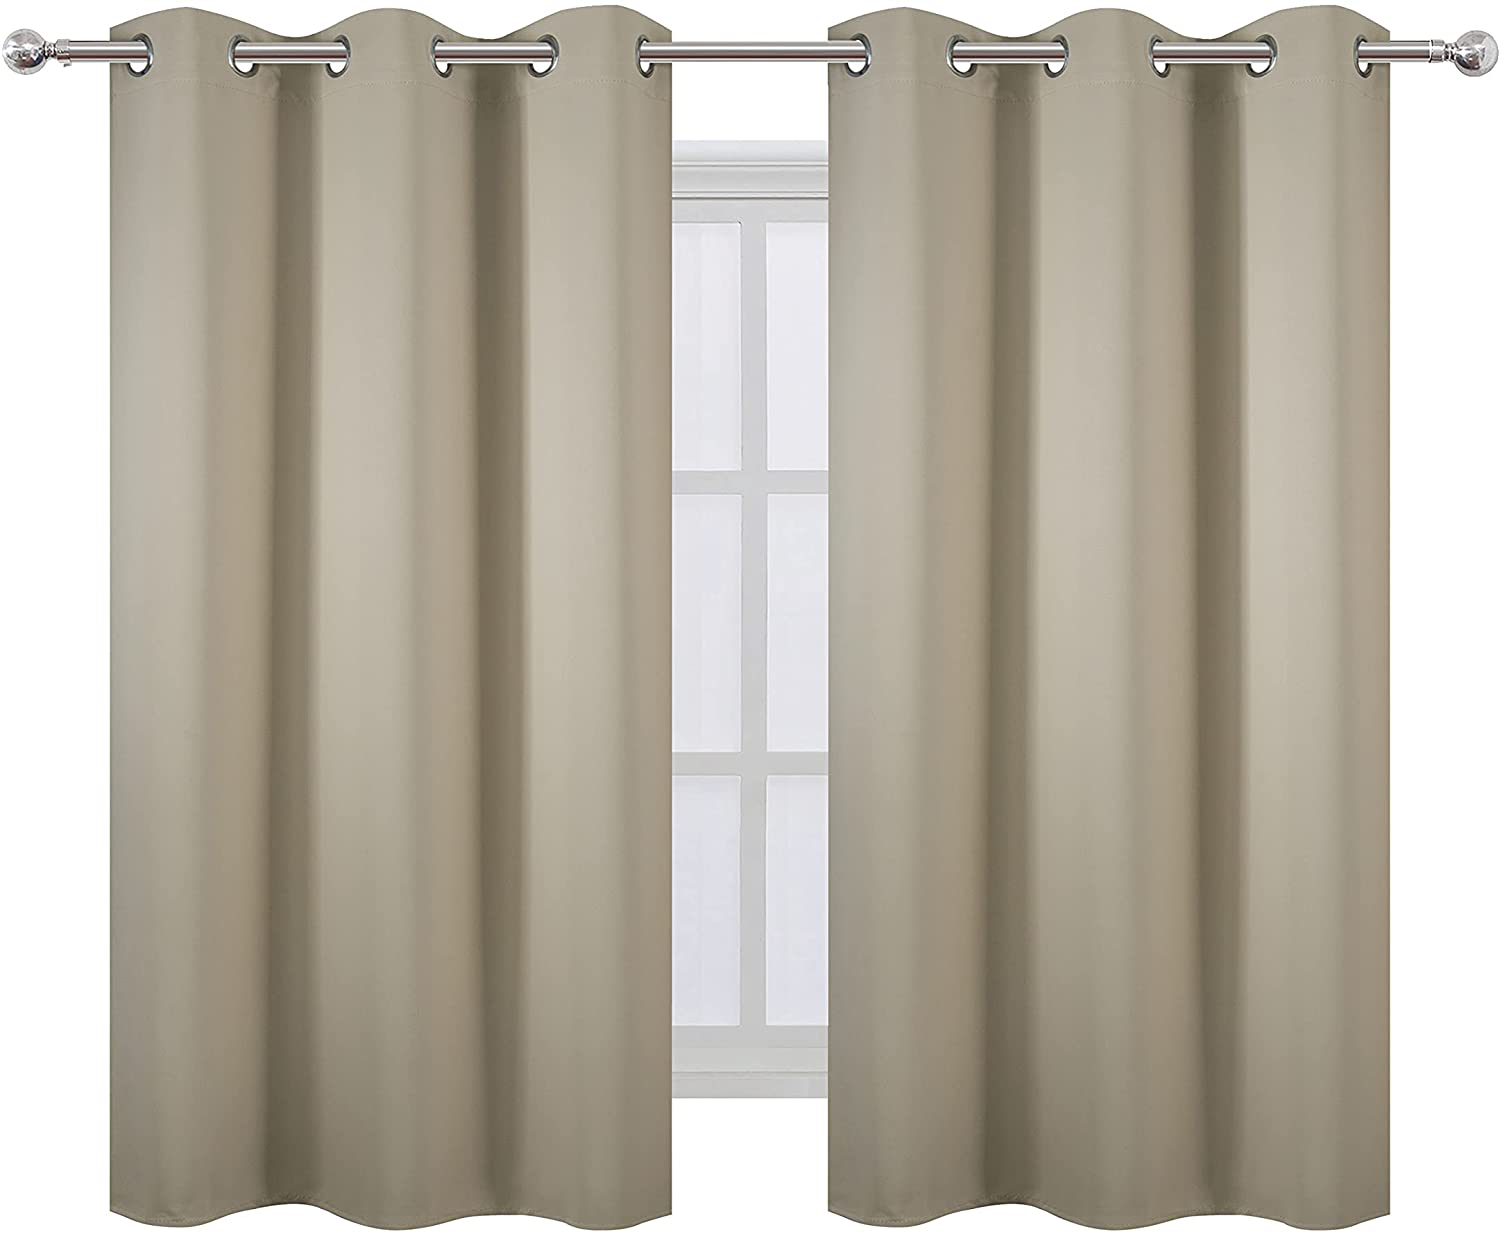 LEMOMO Sky Blue Thermal Blackout Curtains/52 x 84 Inch/Set of 2 Panels Room Darkening Curtains